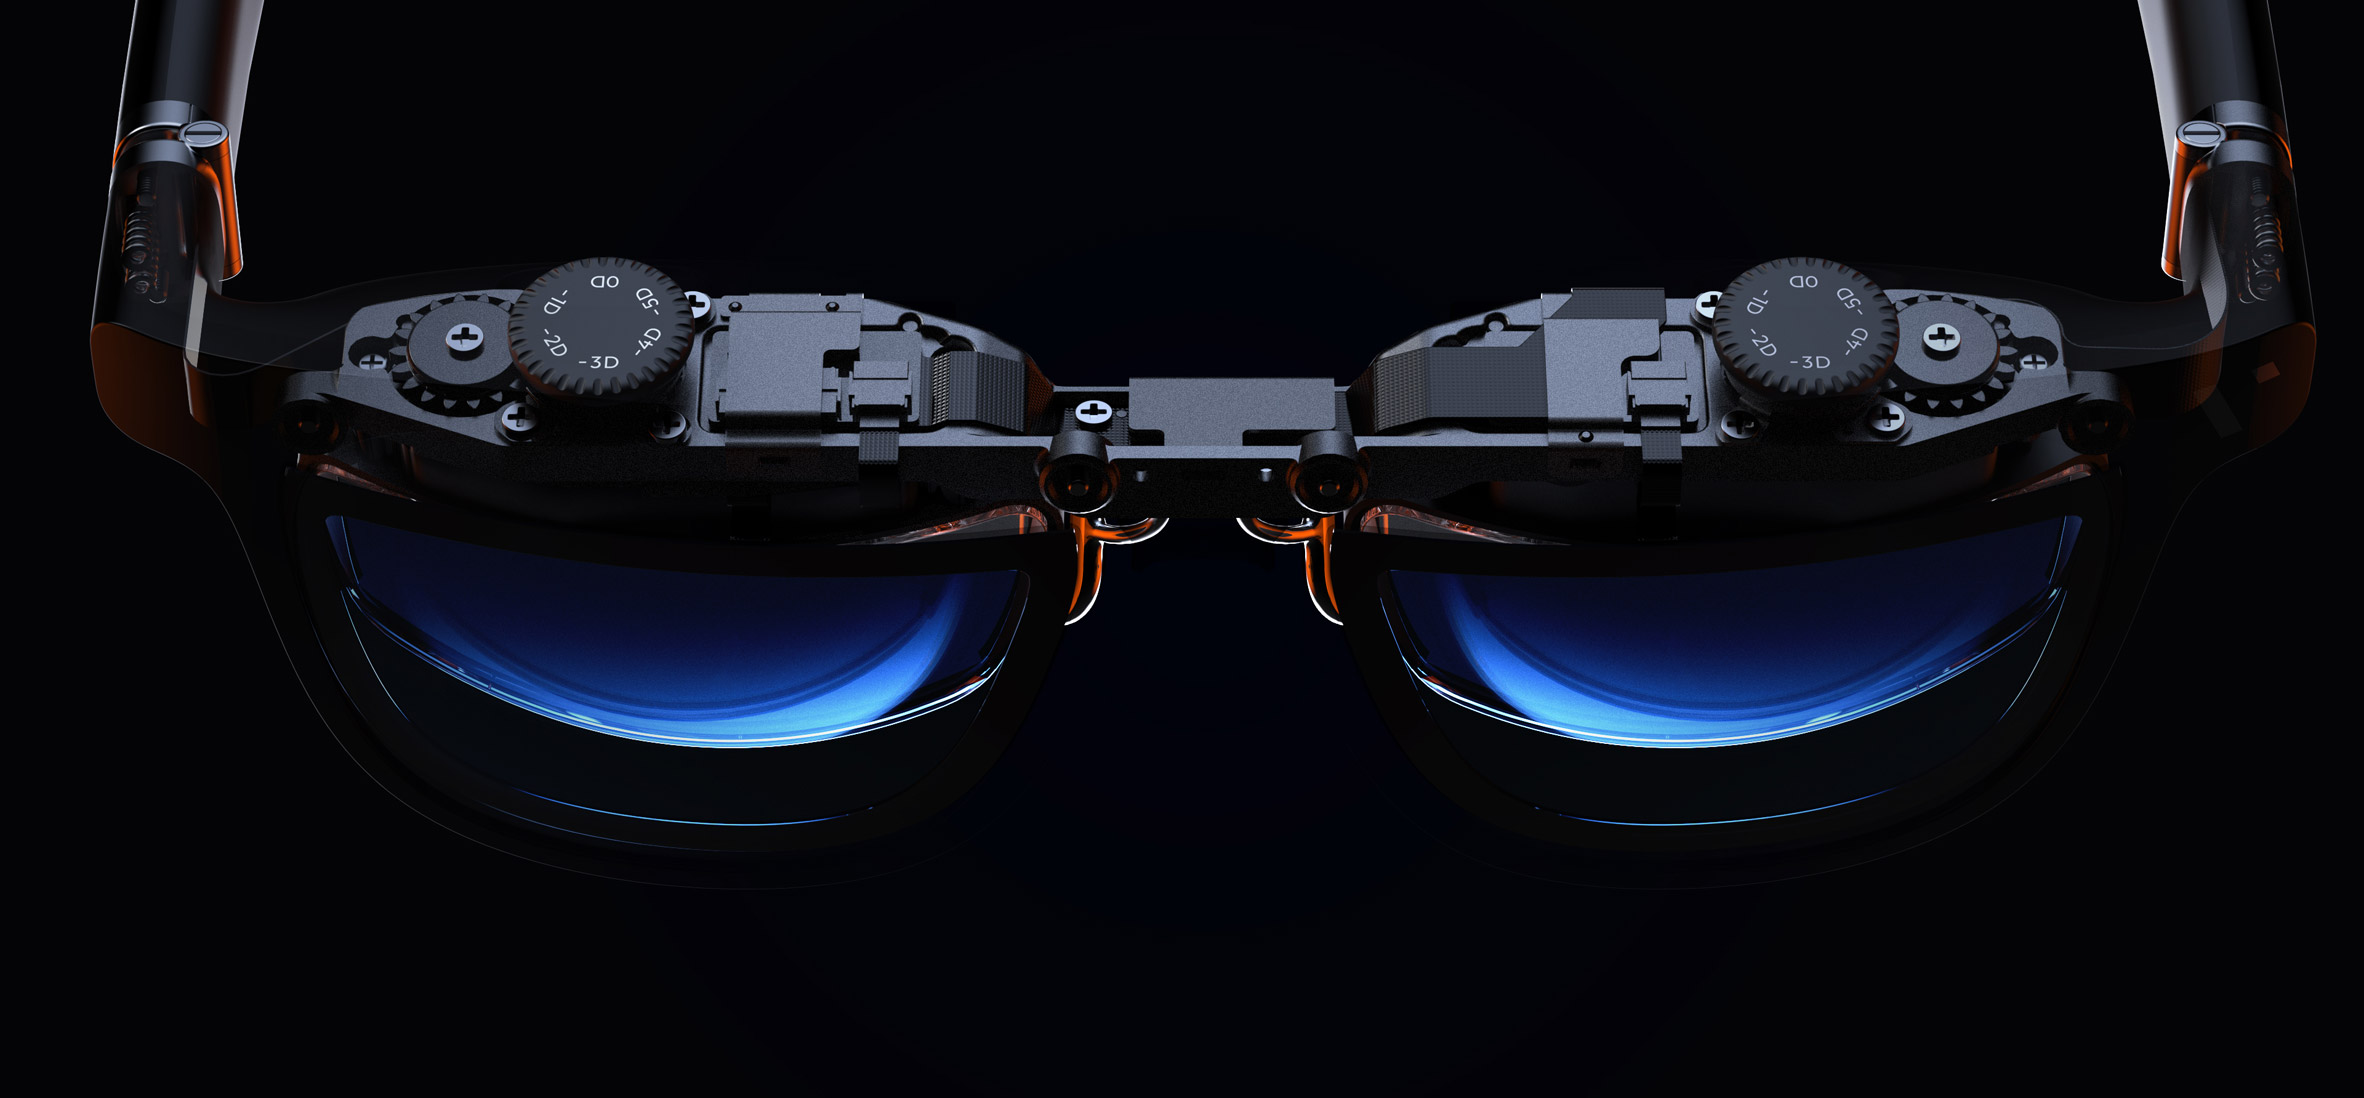 Layer's Viture One smart glasses stream immersive video anywhere